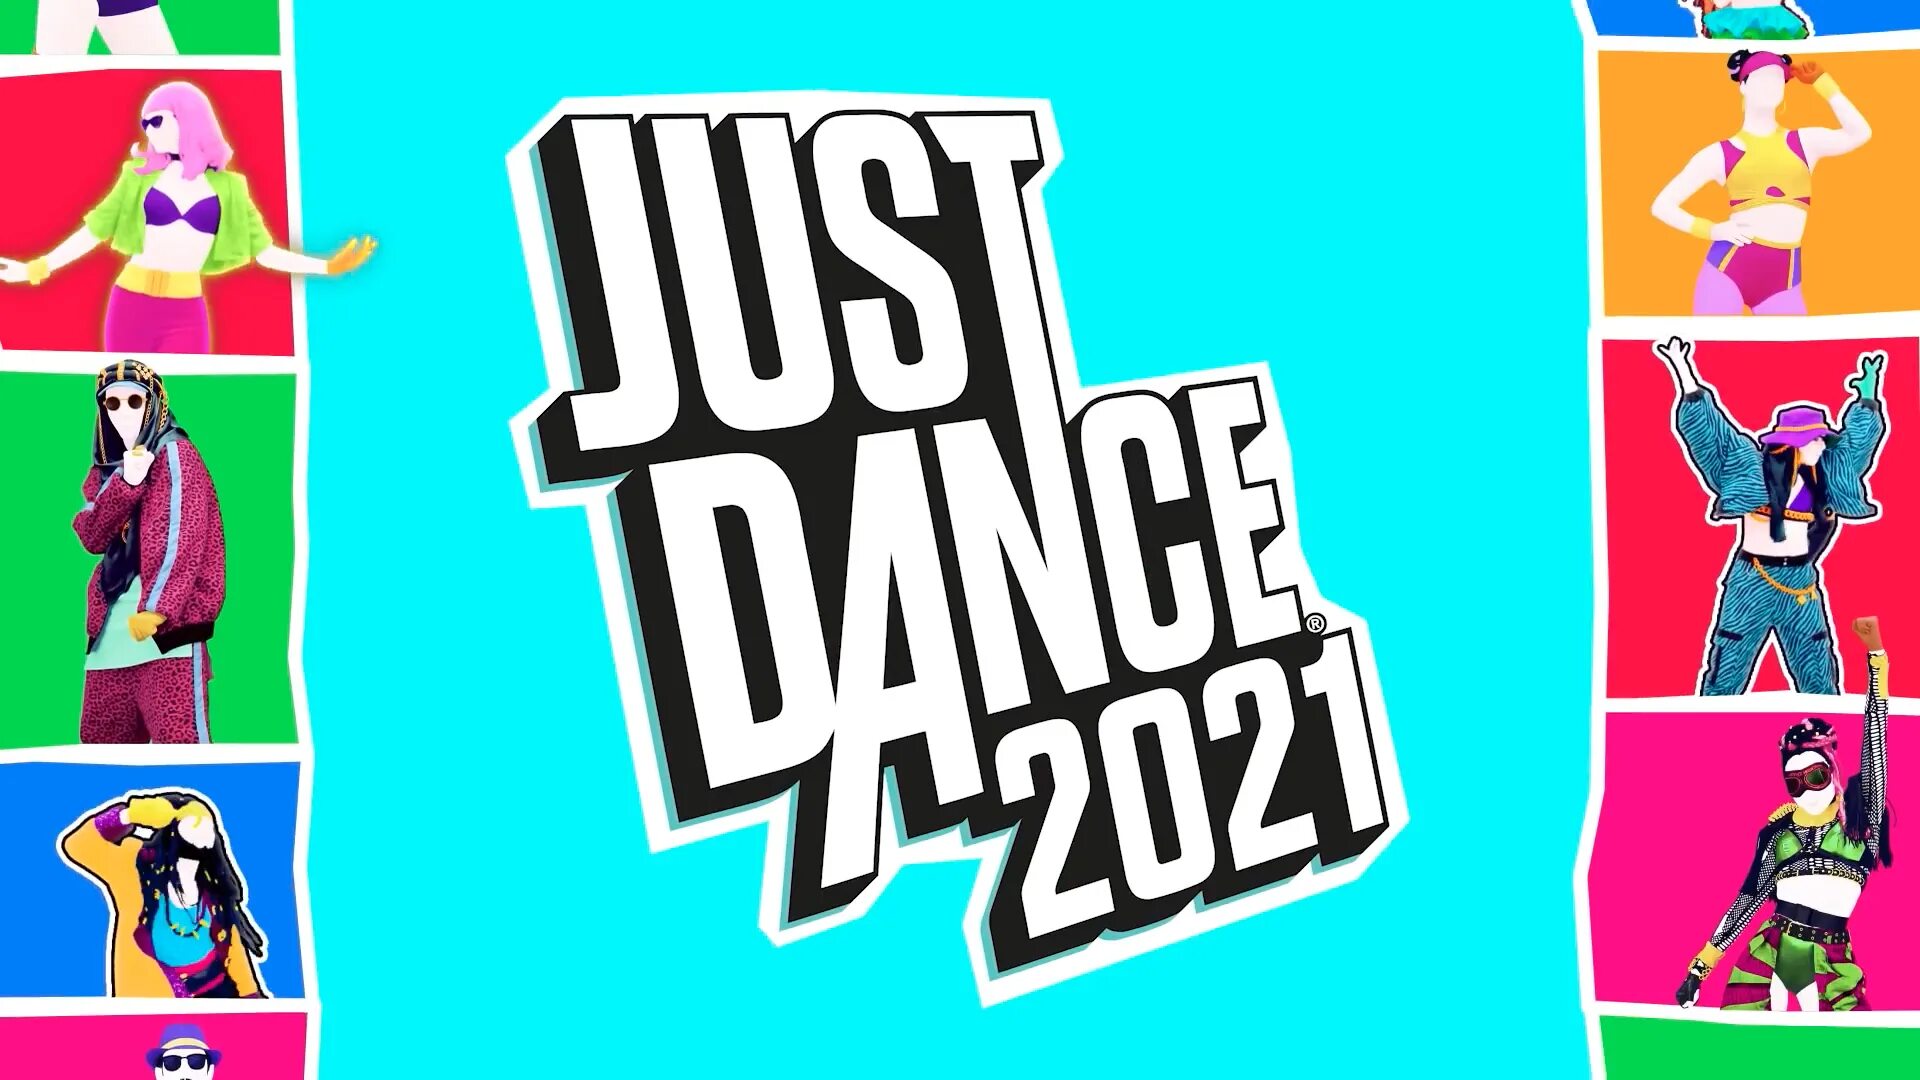 Джас дэнс. Just Dance 2021. Джаз дэнс 2021. Just Dance логотип. Just Dance название.